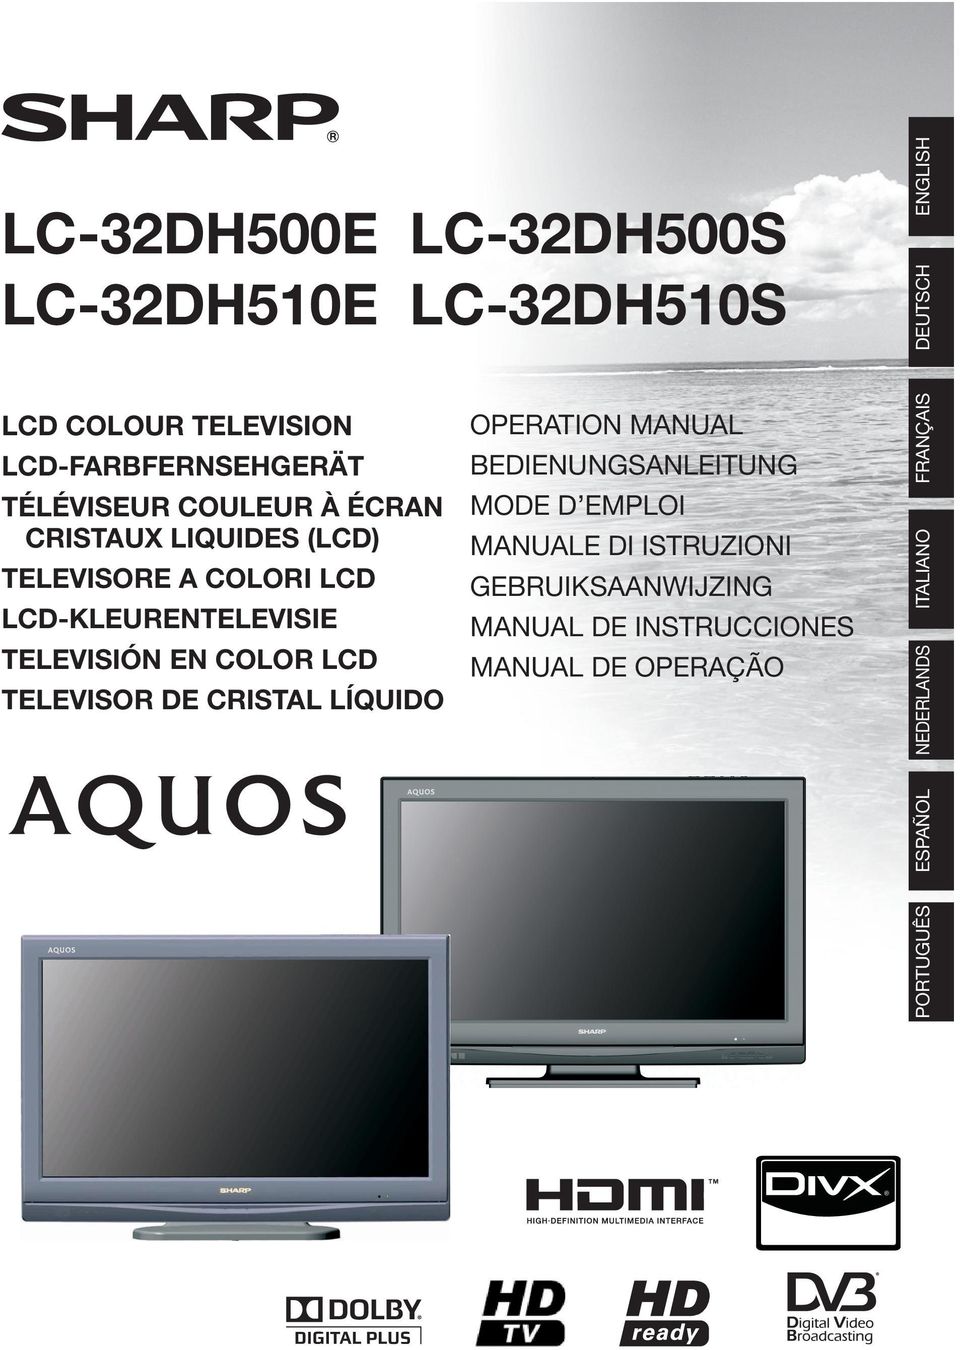 COLOR LCD TELEVISOR DE CRISTAL LÍQUIDO OPERATION MANUAL BEDIENUNGSANLEITUNG MODE D EMPLOI MANUALE DI